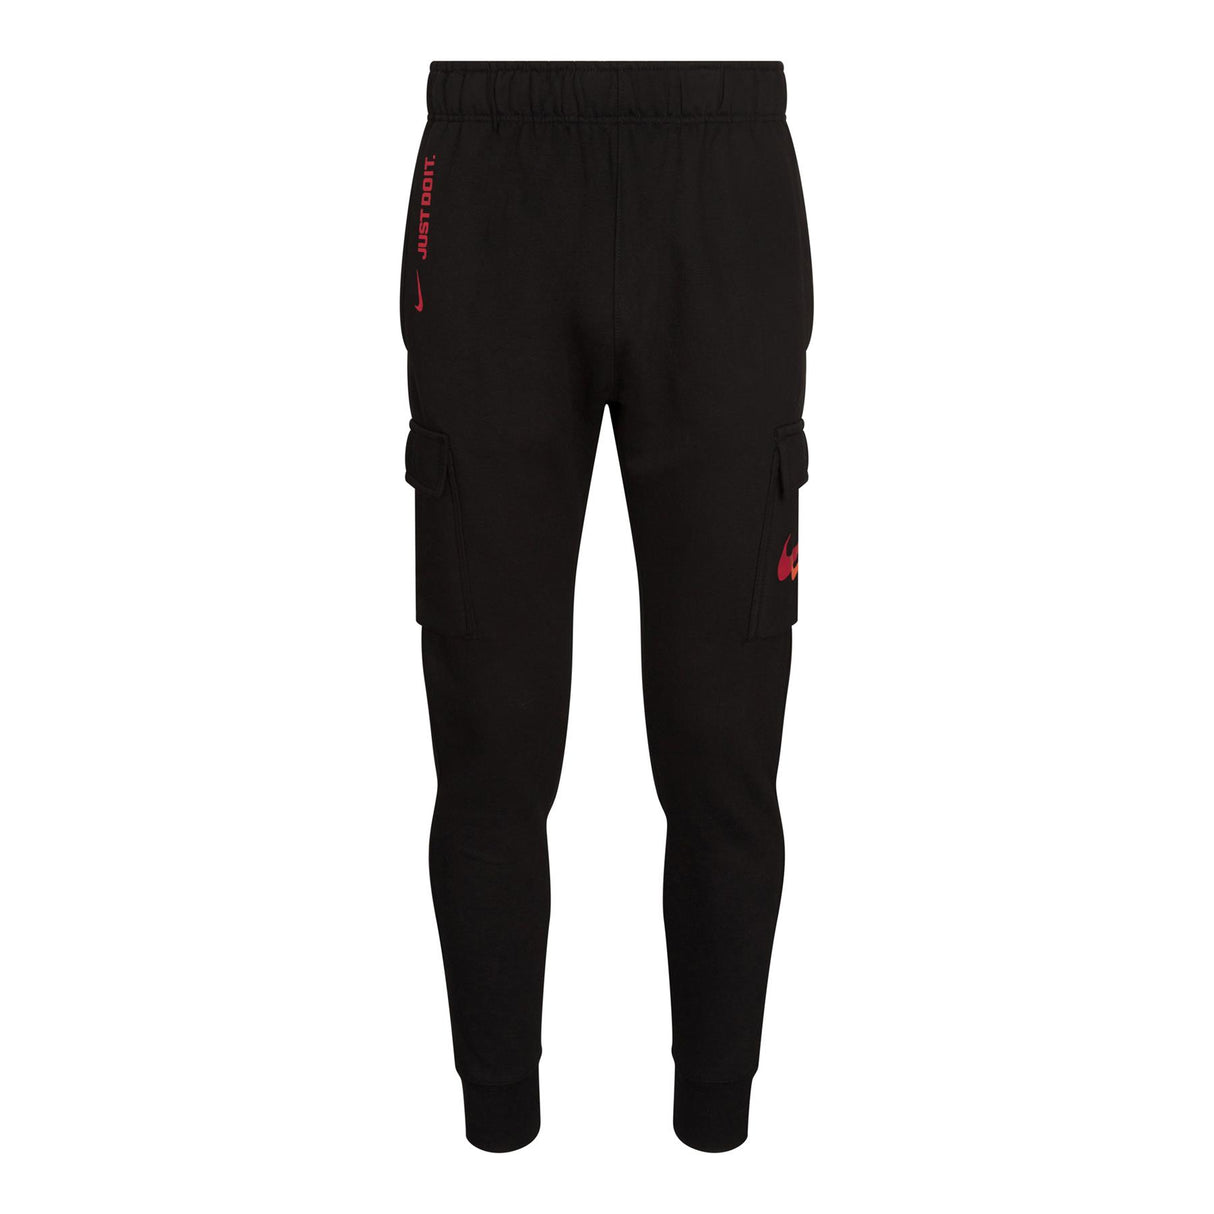 Nike Sportswear Printed Swoosh Men’s Tracksuit in Black